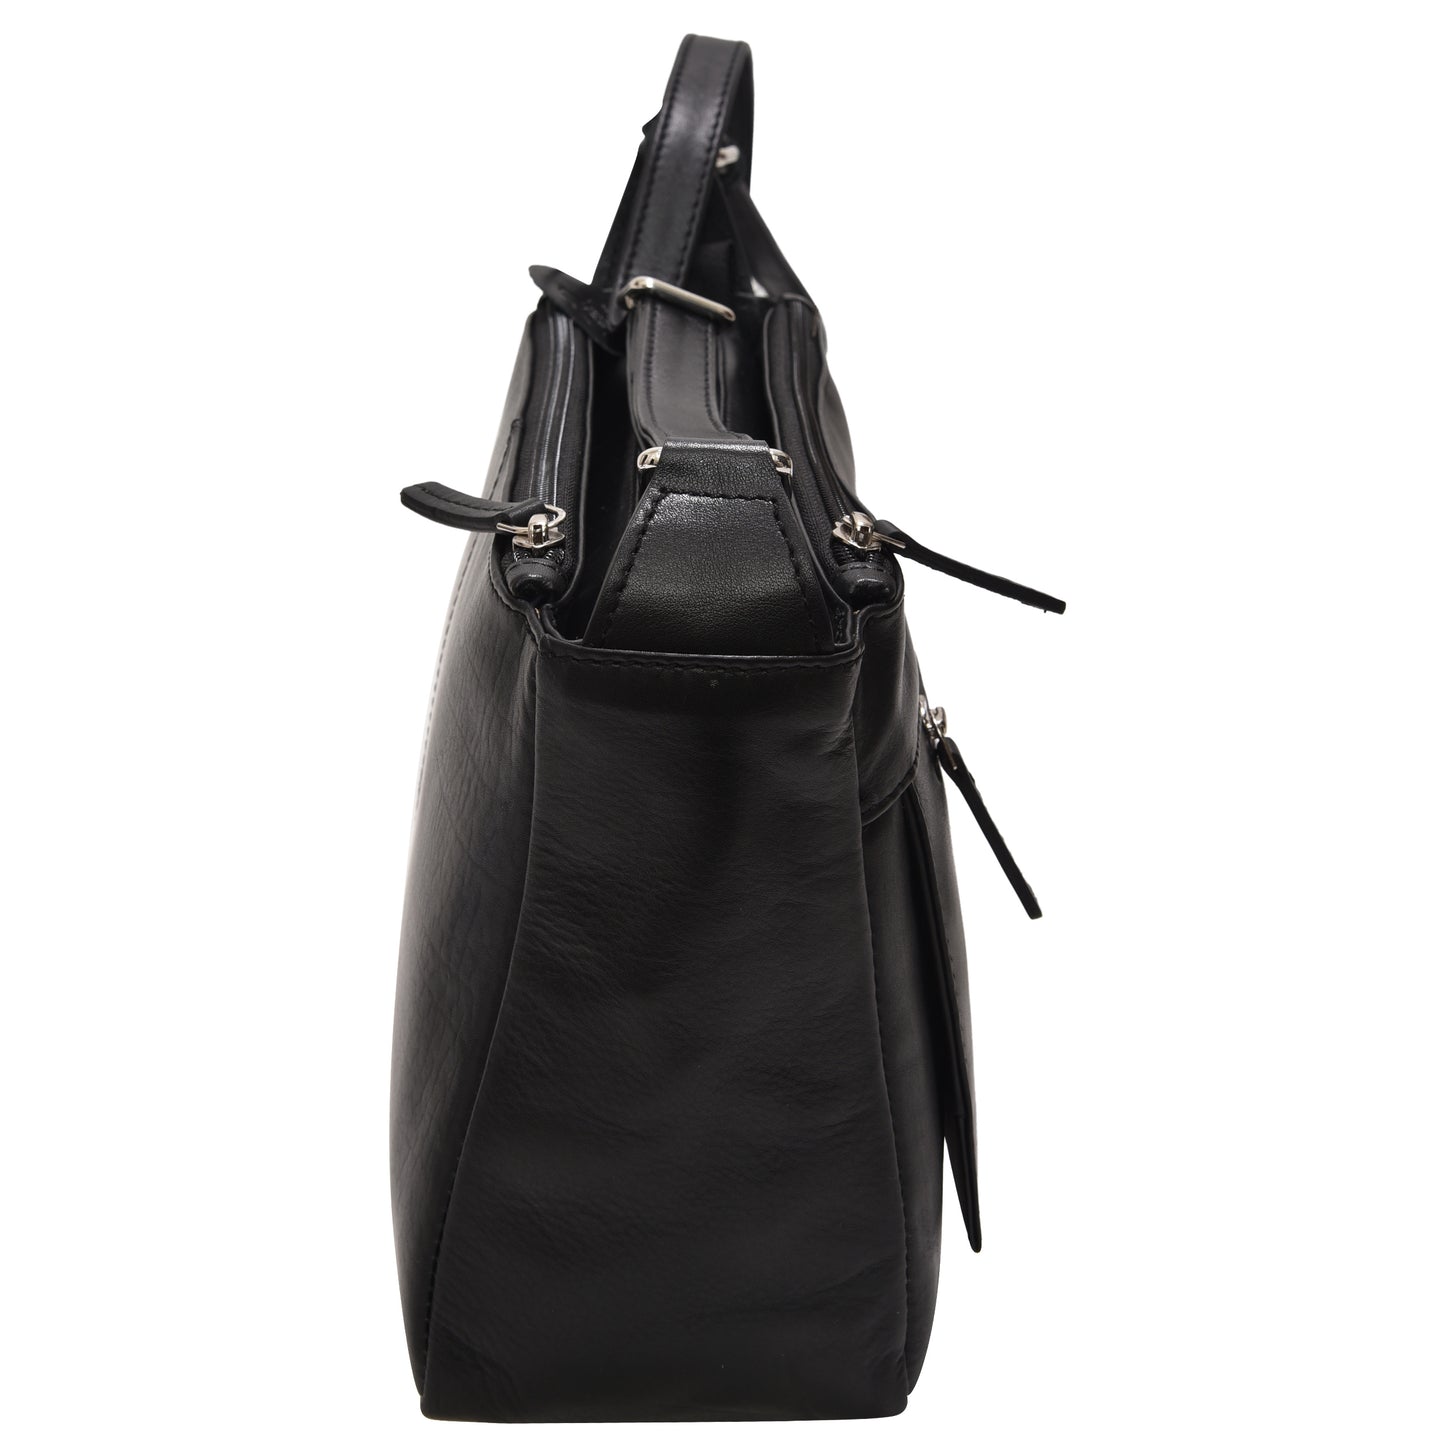 GT-H73: G&T Full-grain Leather Classic Multi-zip Handbag with Long Adjustable Strap